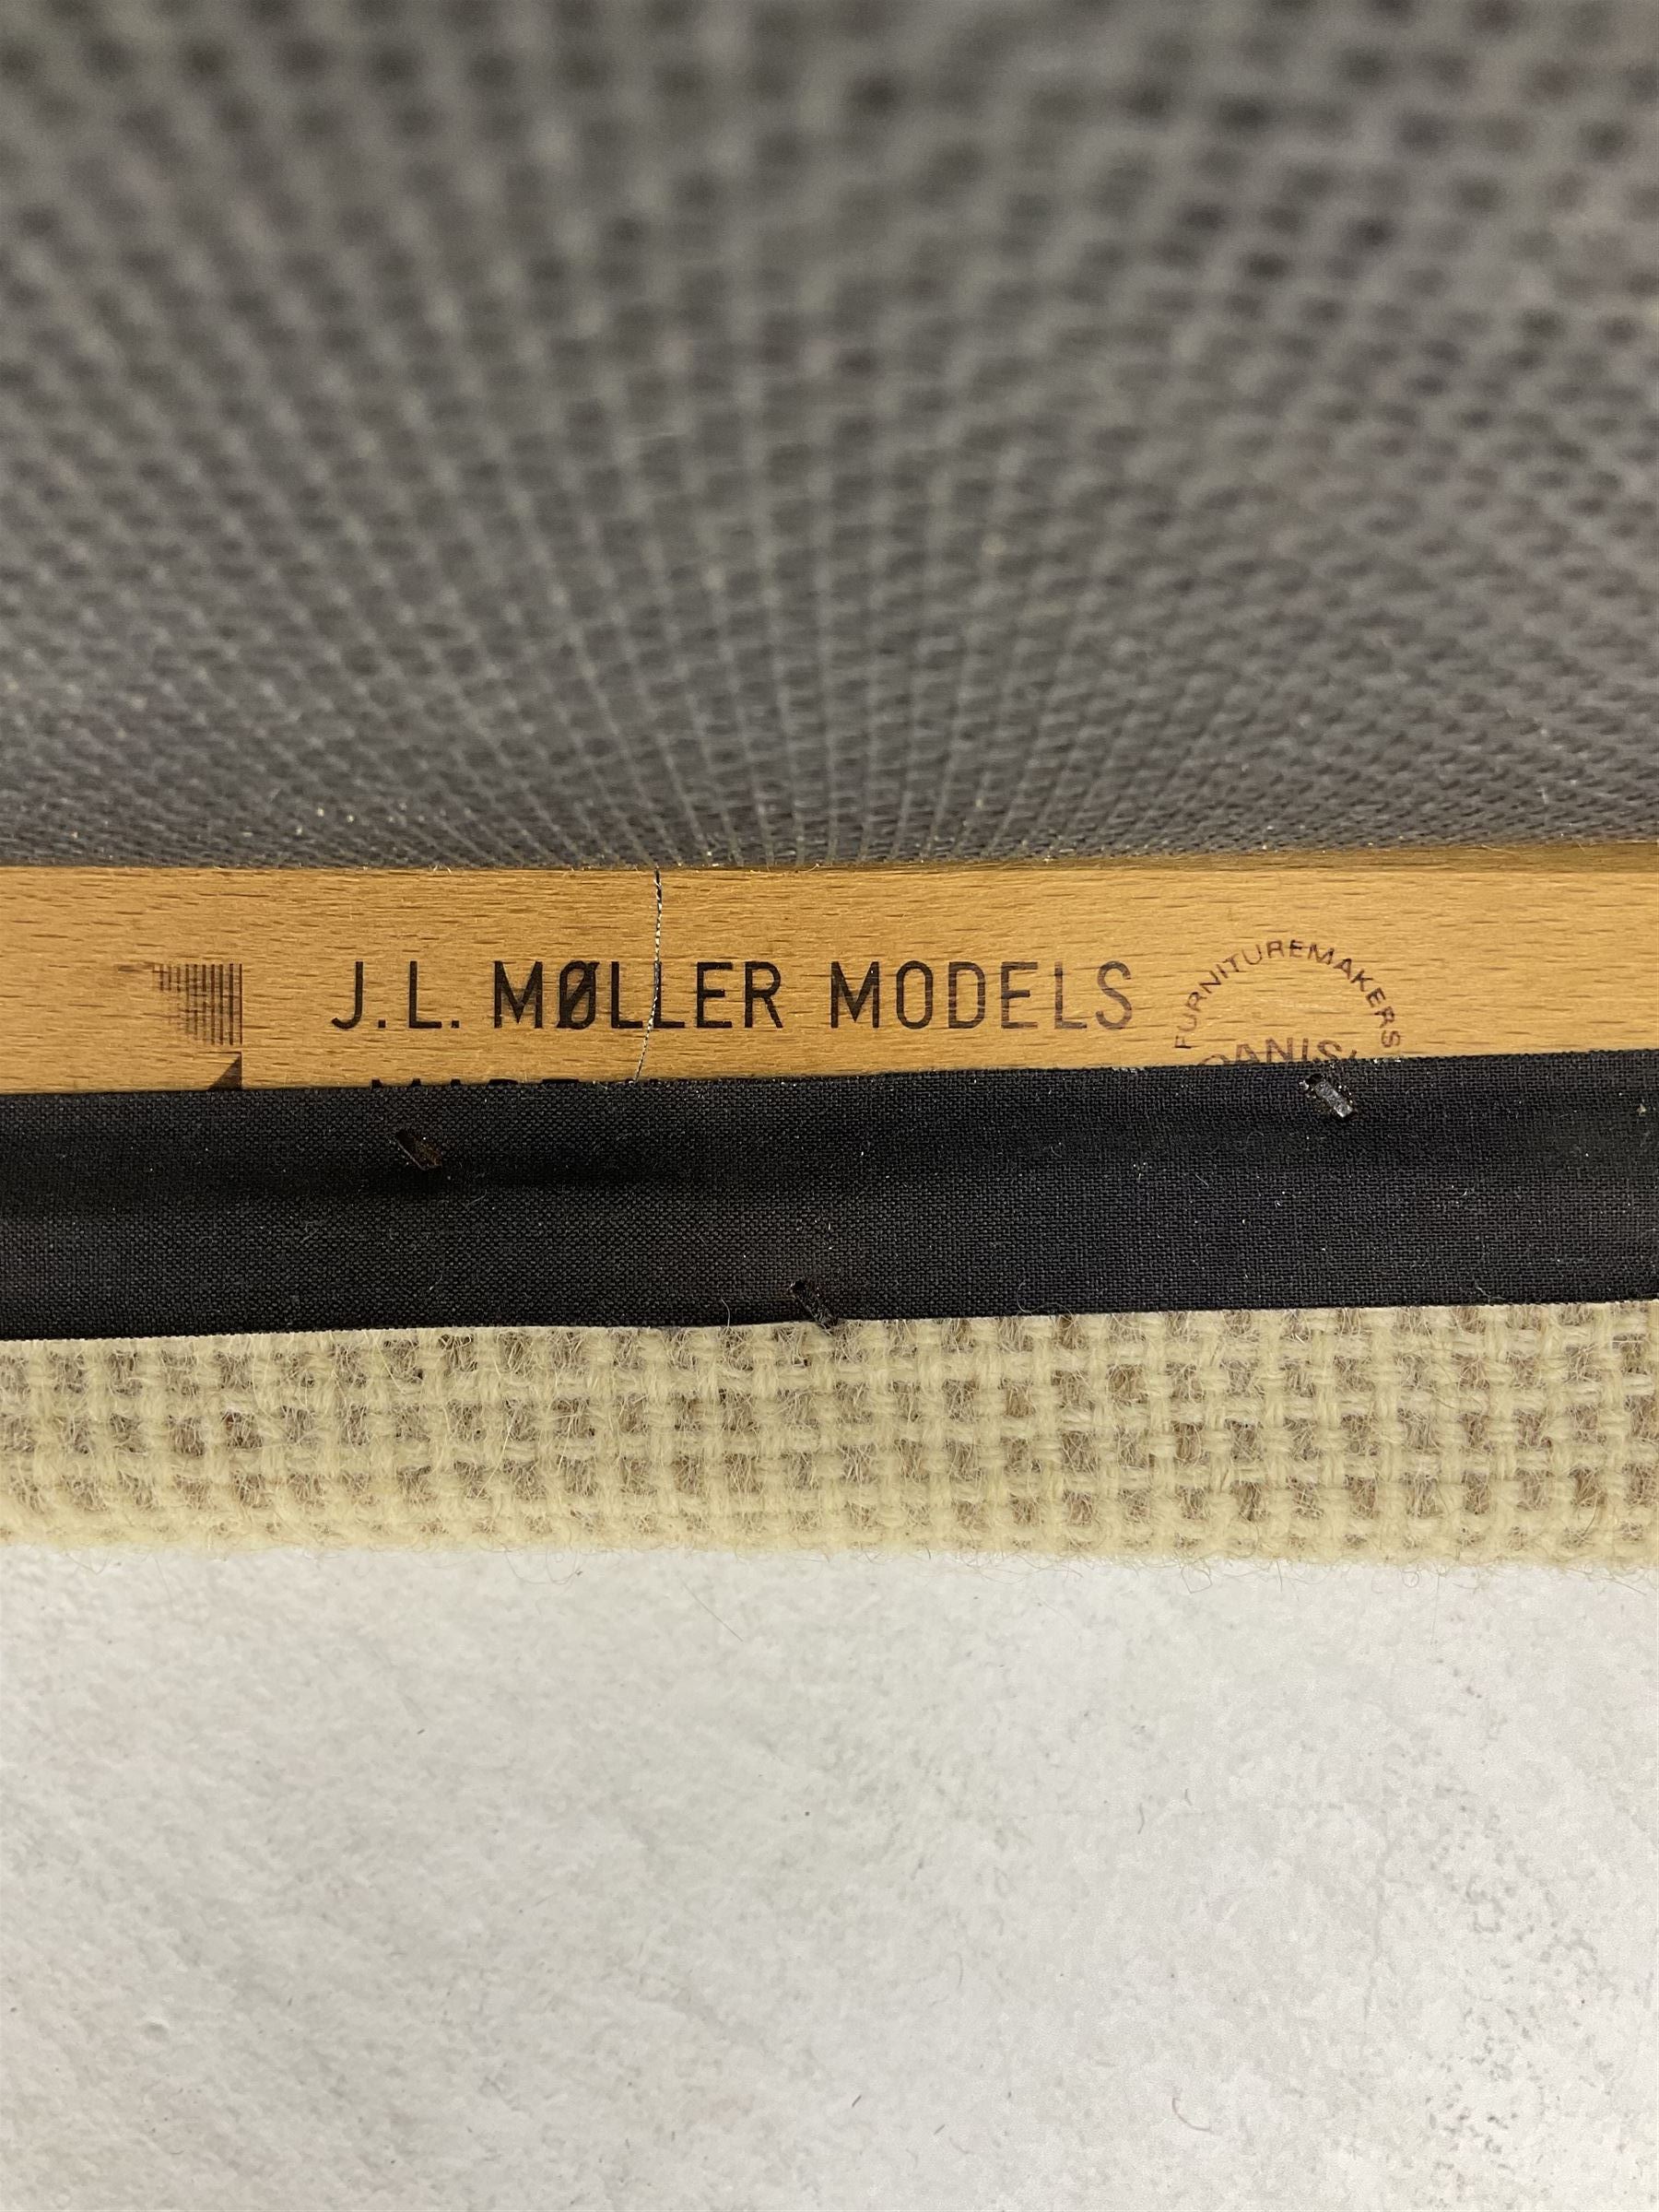 Niels Otto M�ller for J L Moller - 20th century Danish teak 'model 85' chair - Image 7 of 7